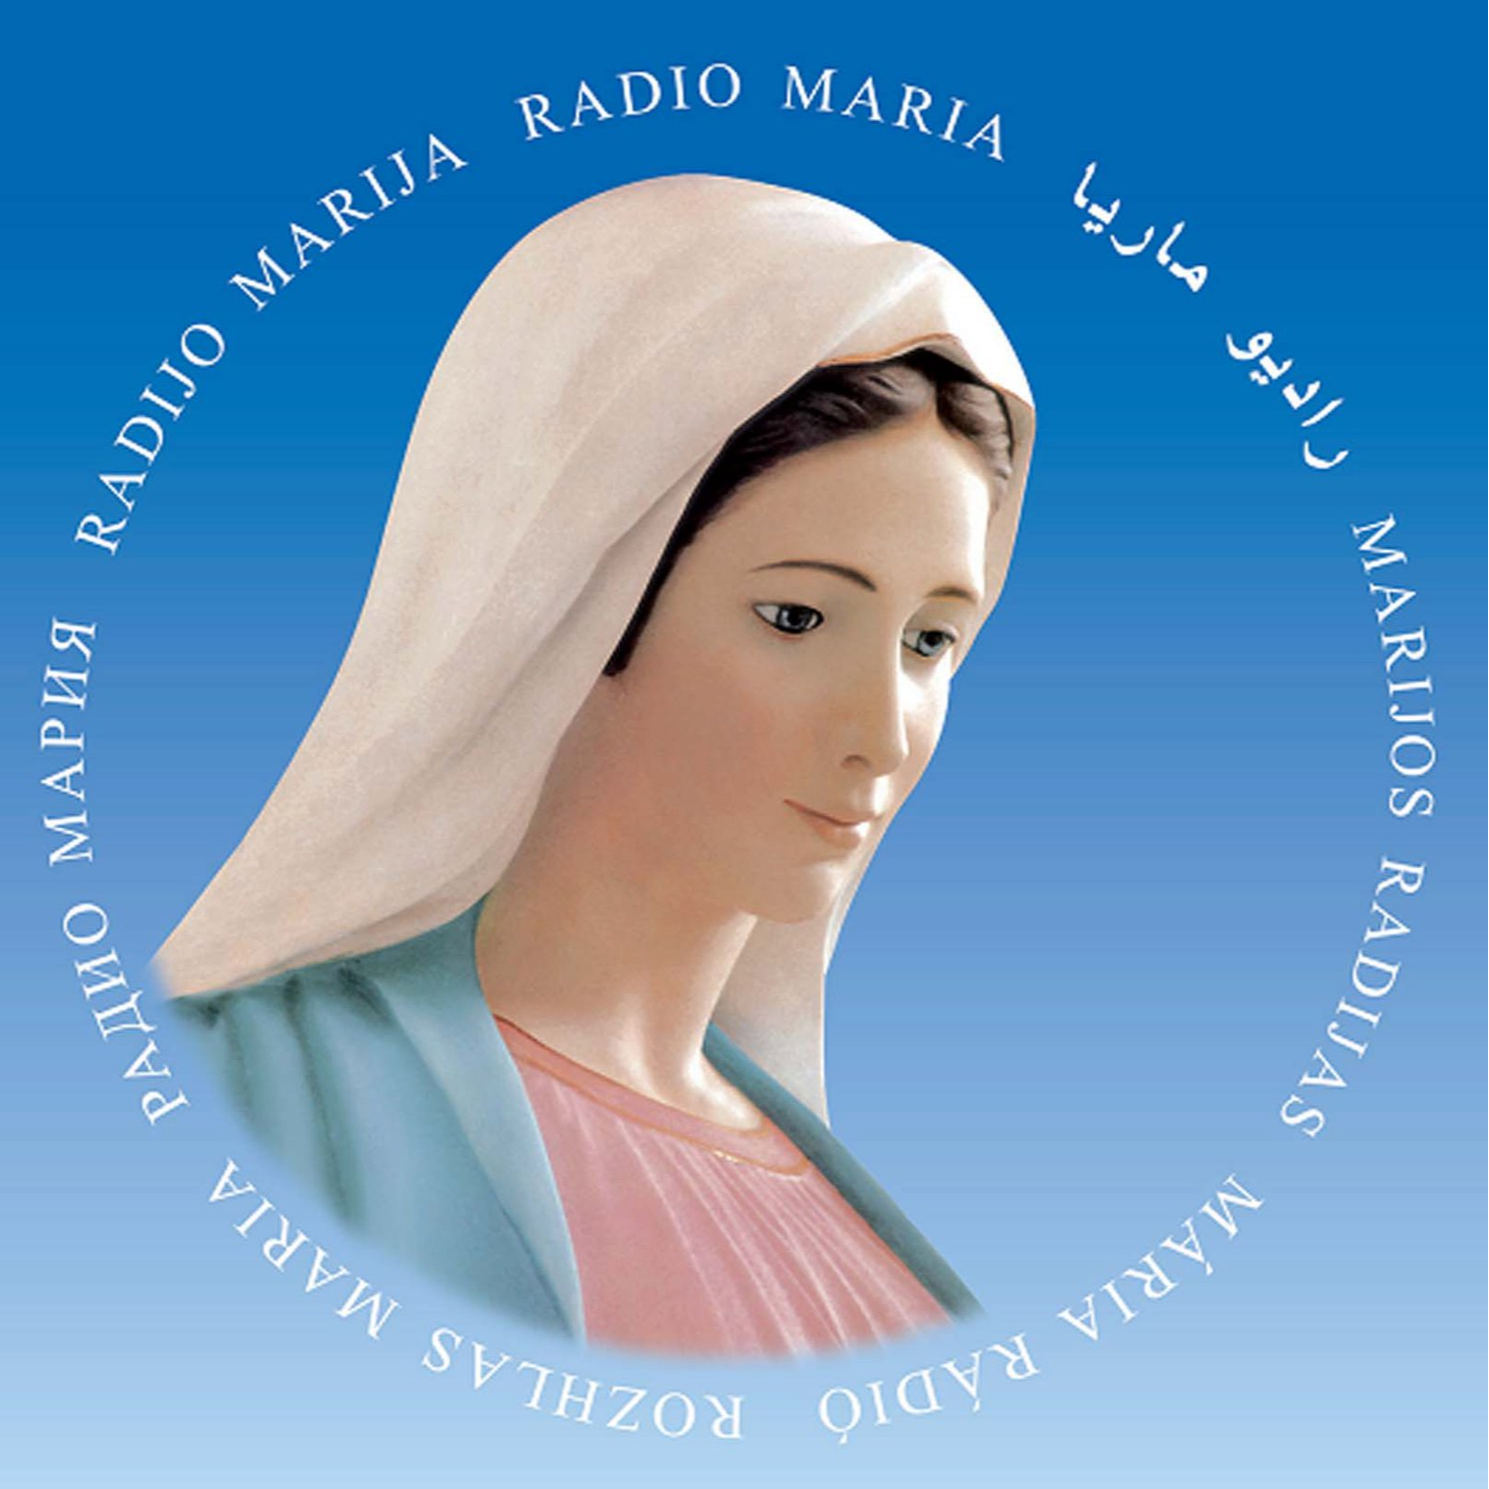 Radio Maria Tarlac